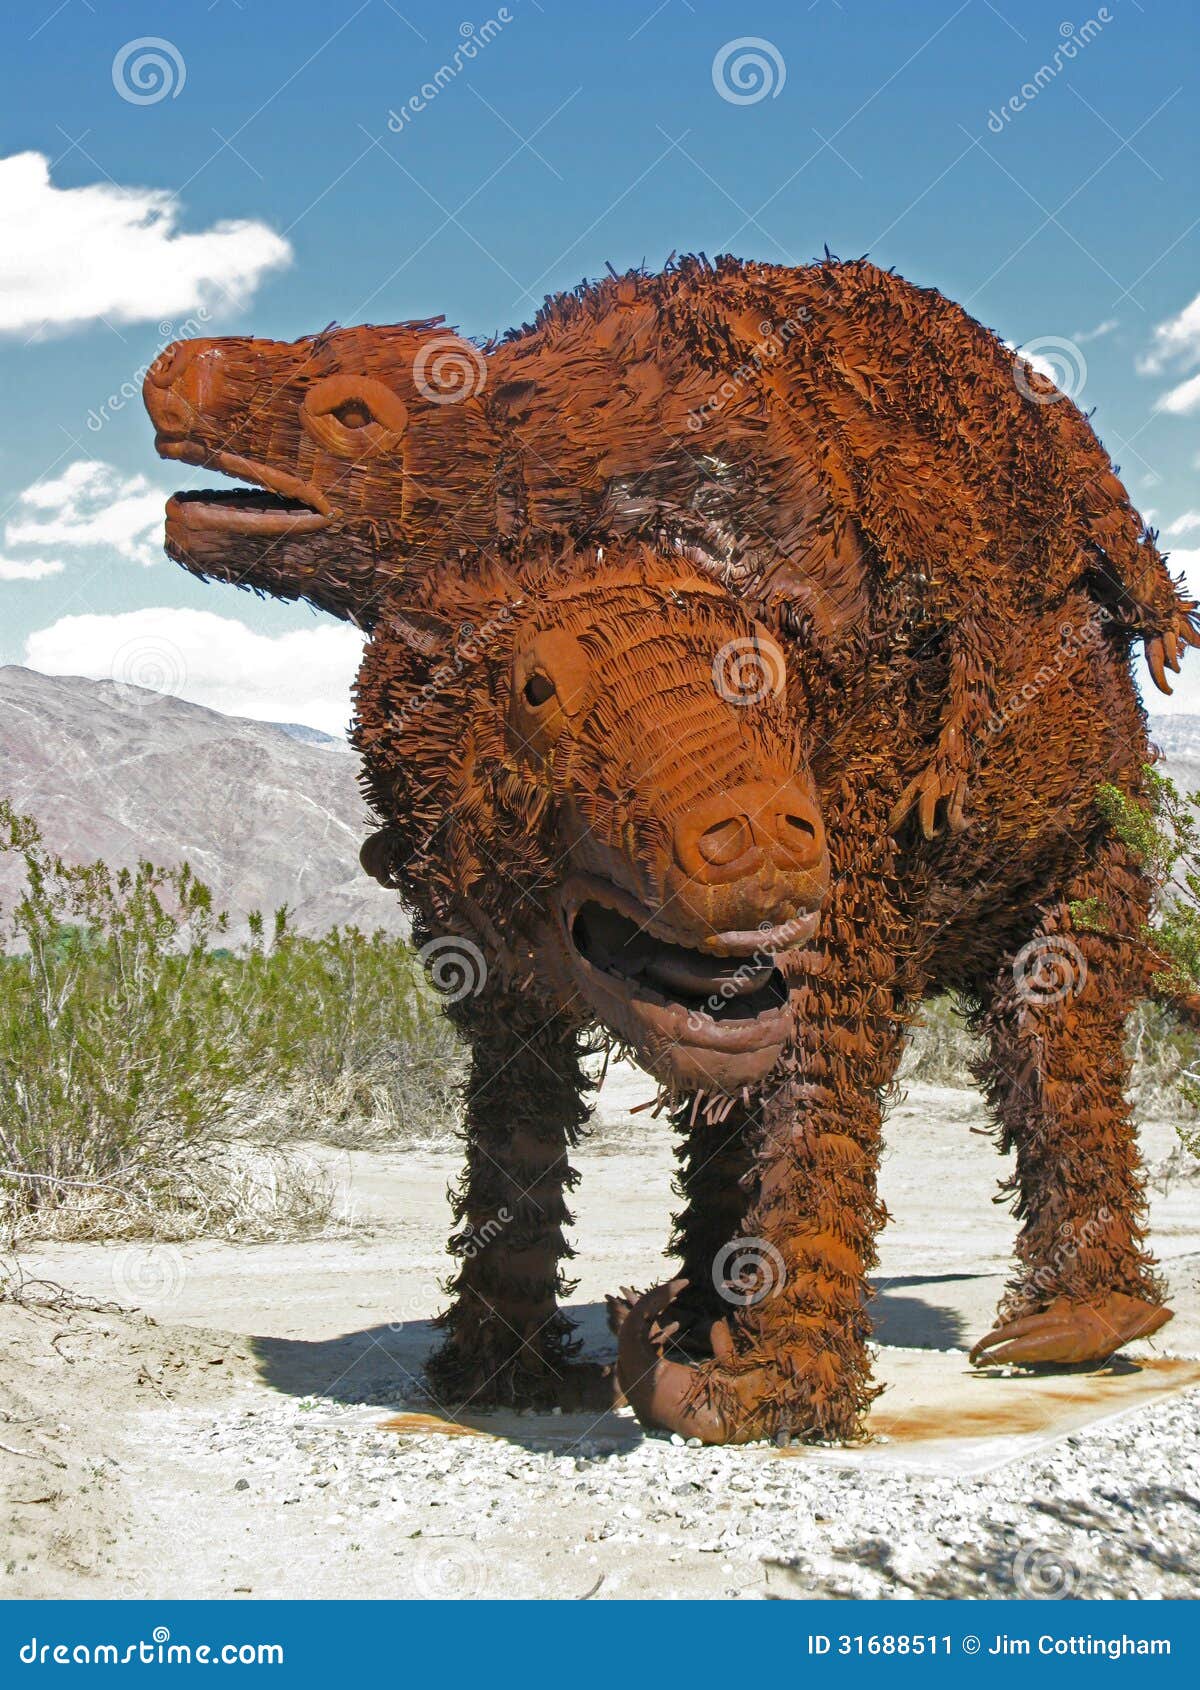 Prehistoric Animals - Metal Sculpture Stock Image - Image of baby, bear:  31688511